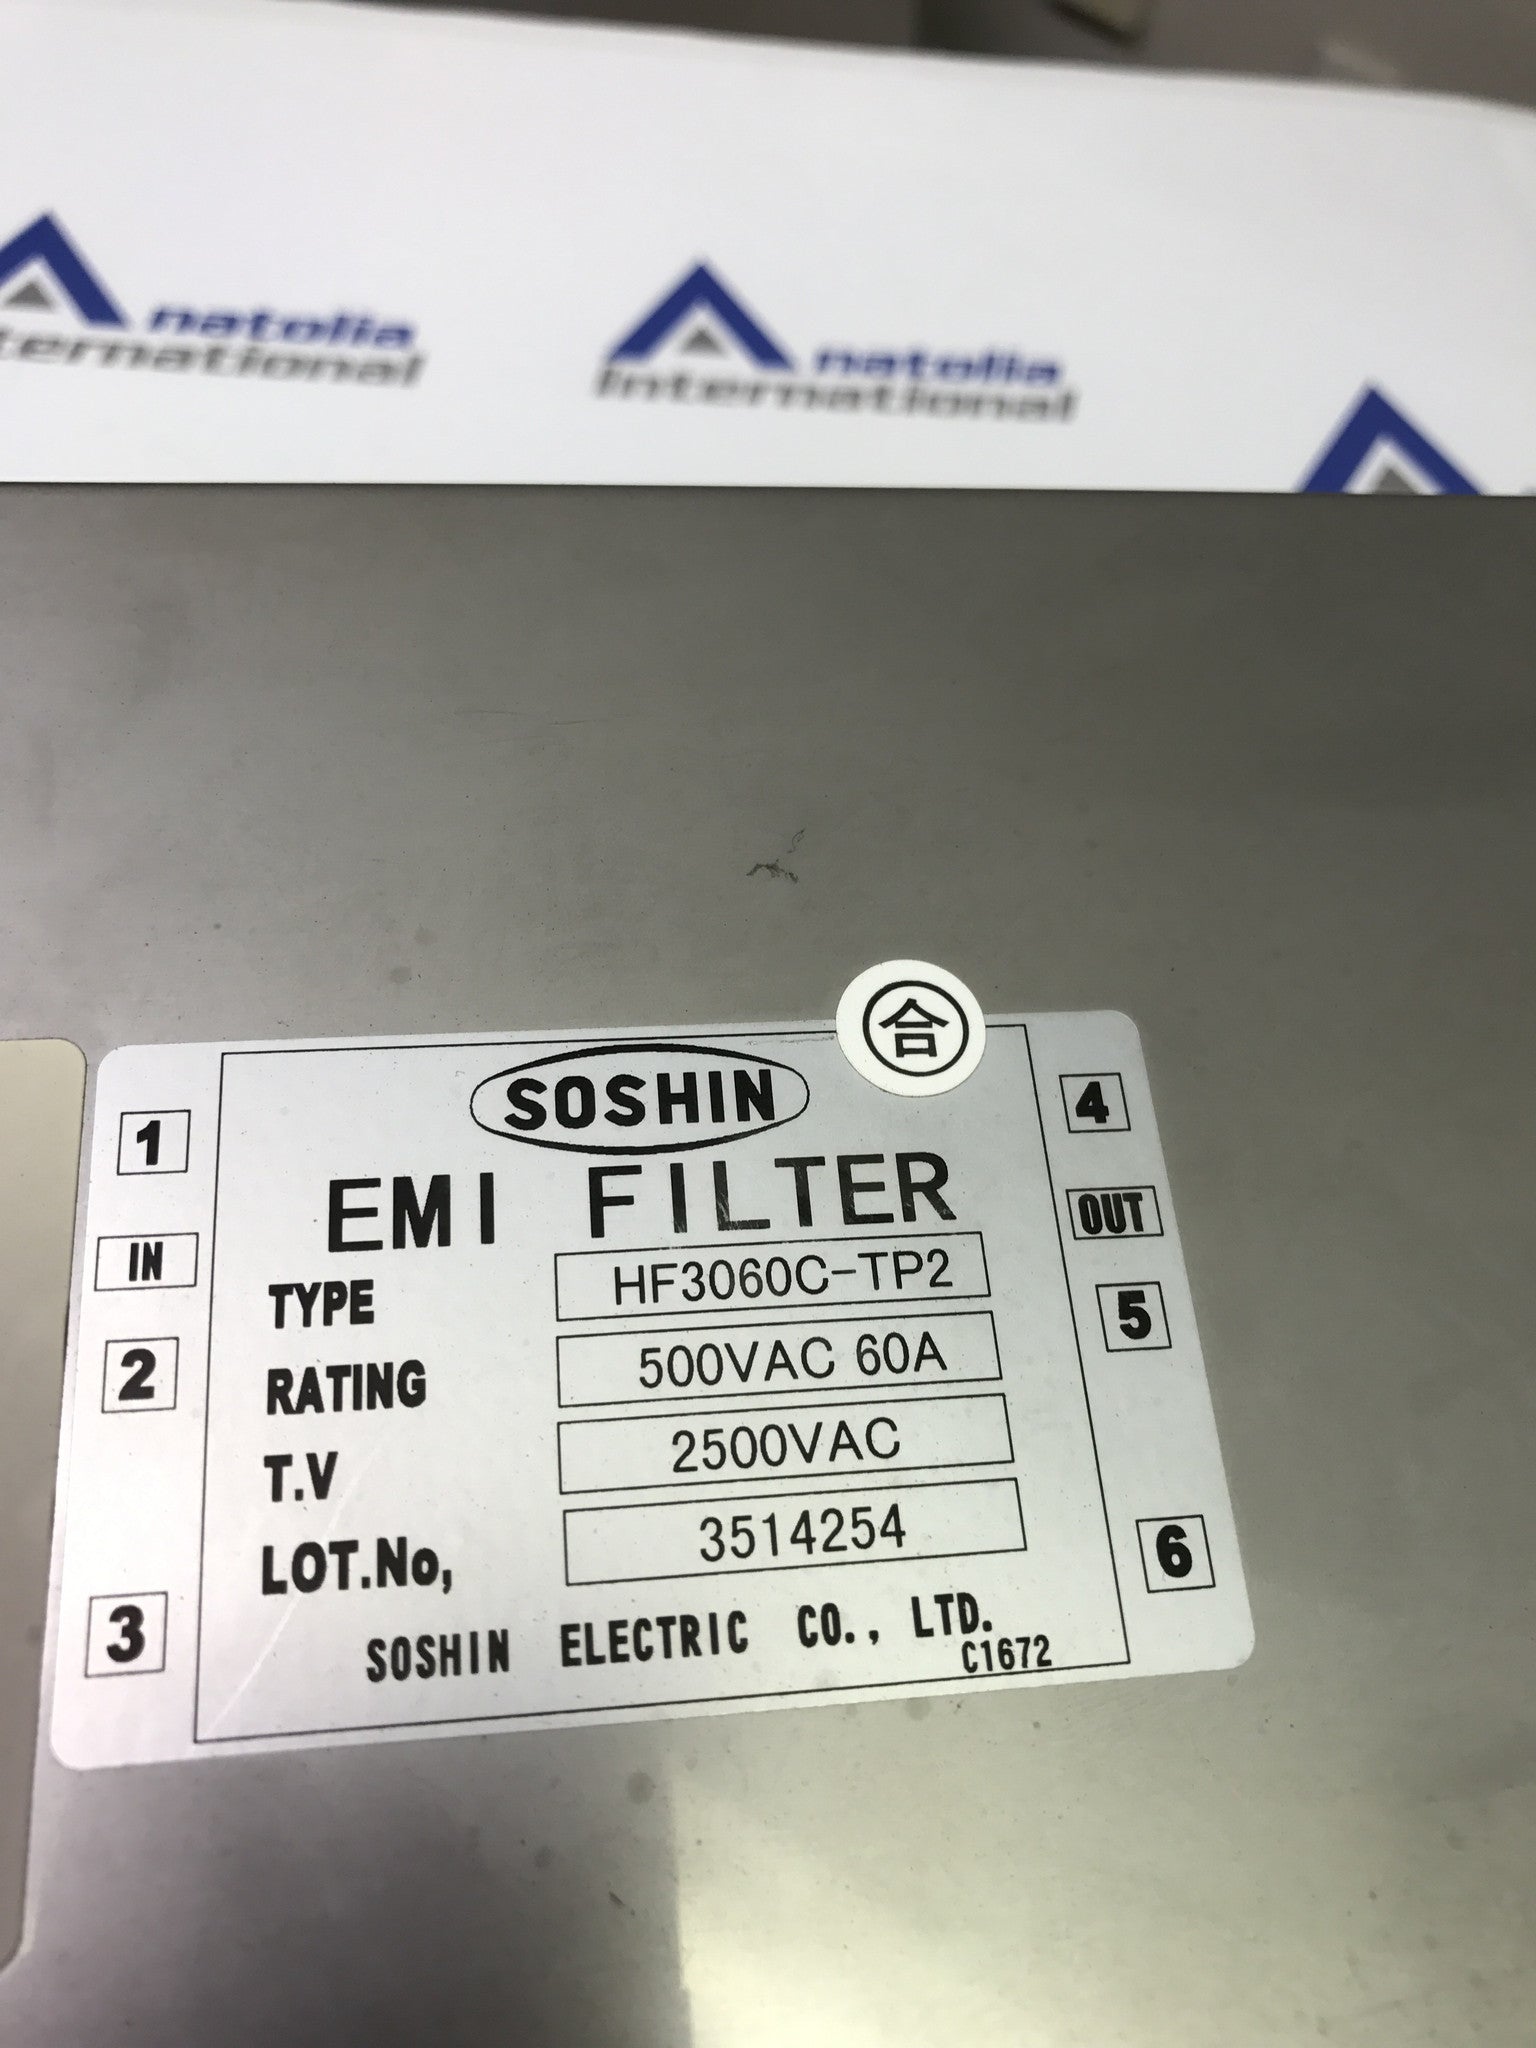 BSX12-1400 EMI Filter HF3060CTP2 for Toshiba Infinix Cath Angio - Anatolia International, Parts